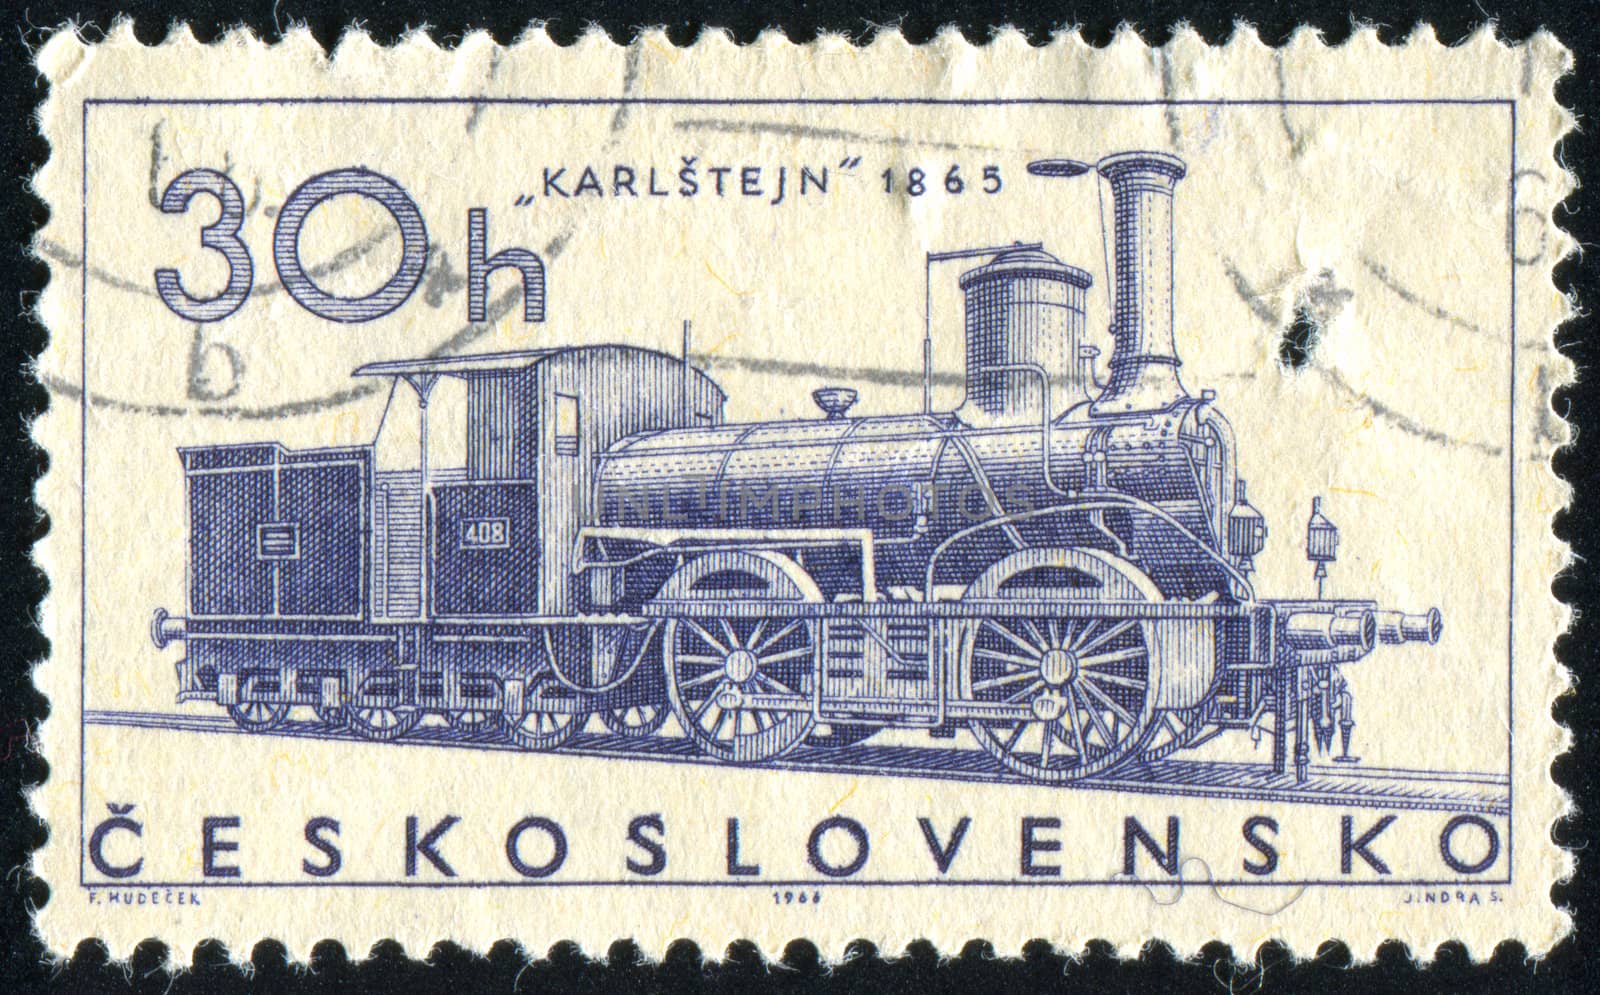 CZECHOSLOVAKIA - CIRCA 1966: stamp printed by Czechoslovakia, shows locomotive, circa 1966